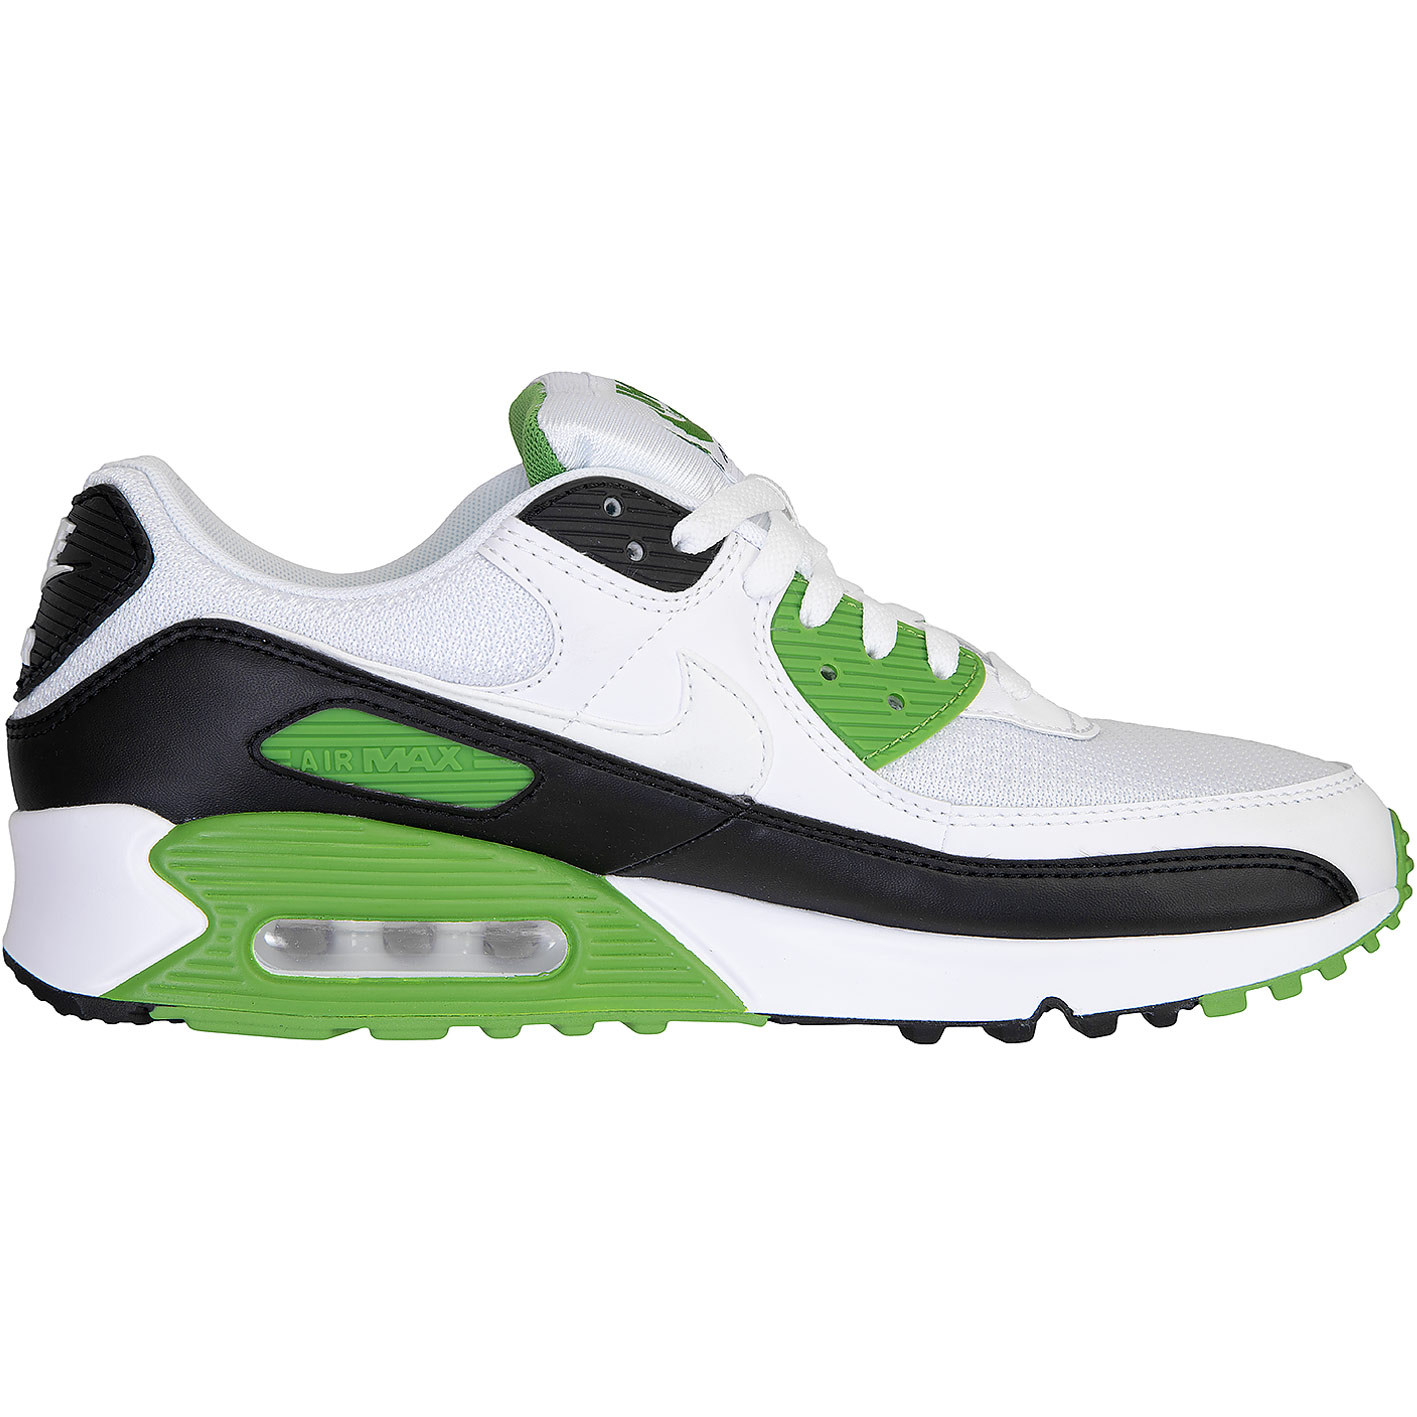 ☆ Nike Air Max 90 Sneaker weiß/grün - hier bestellen!